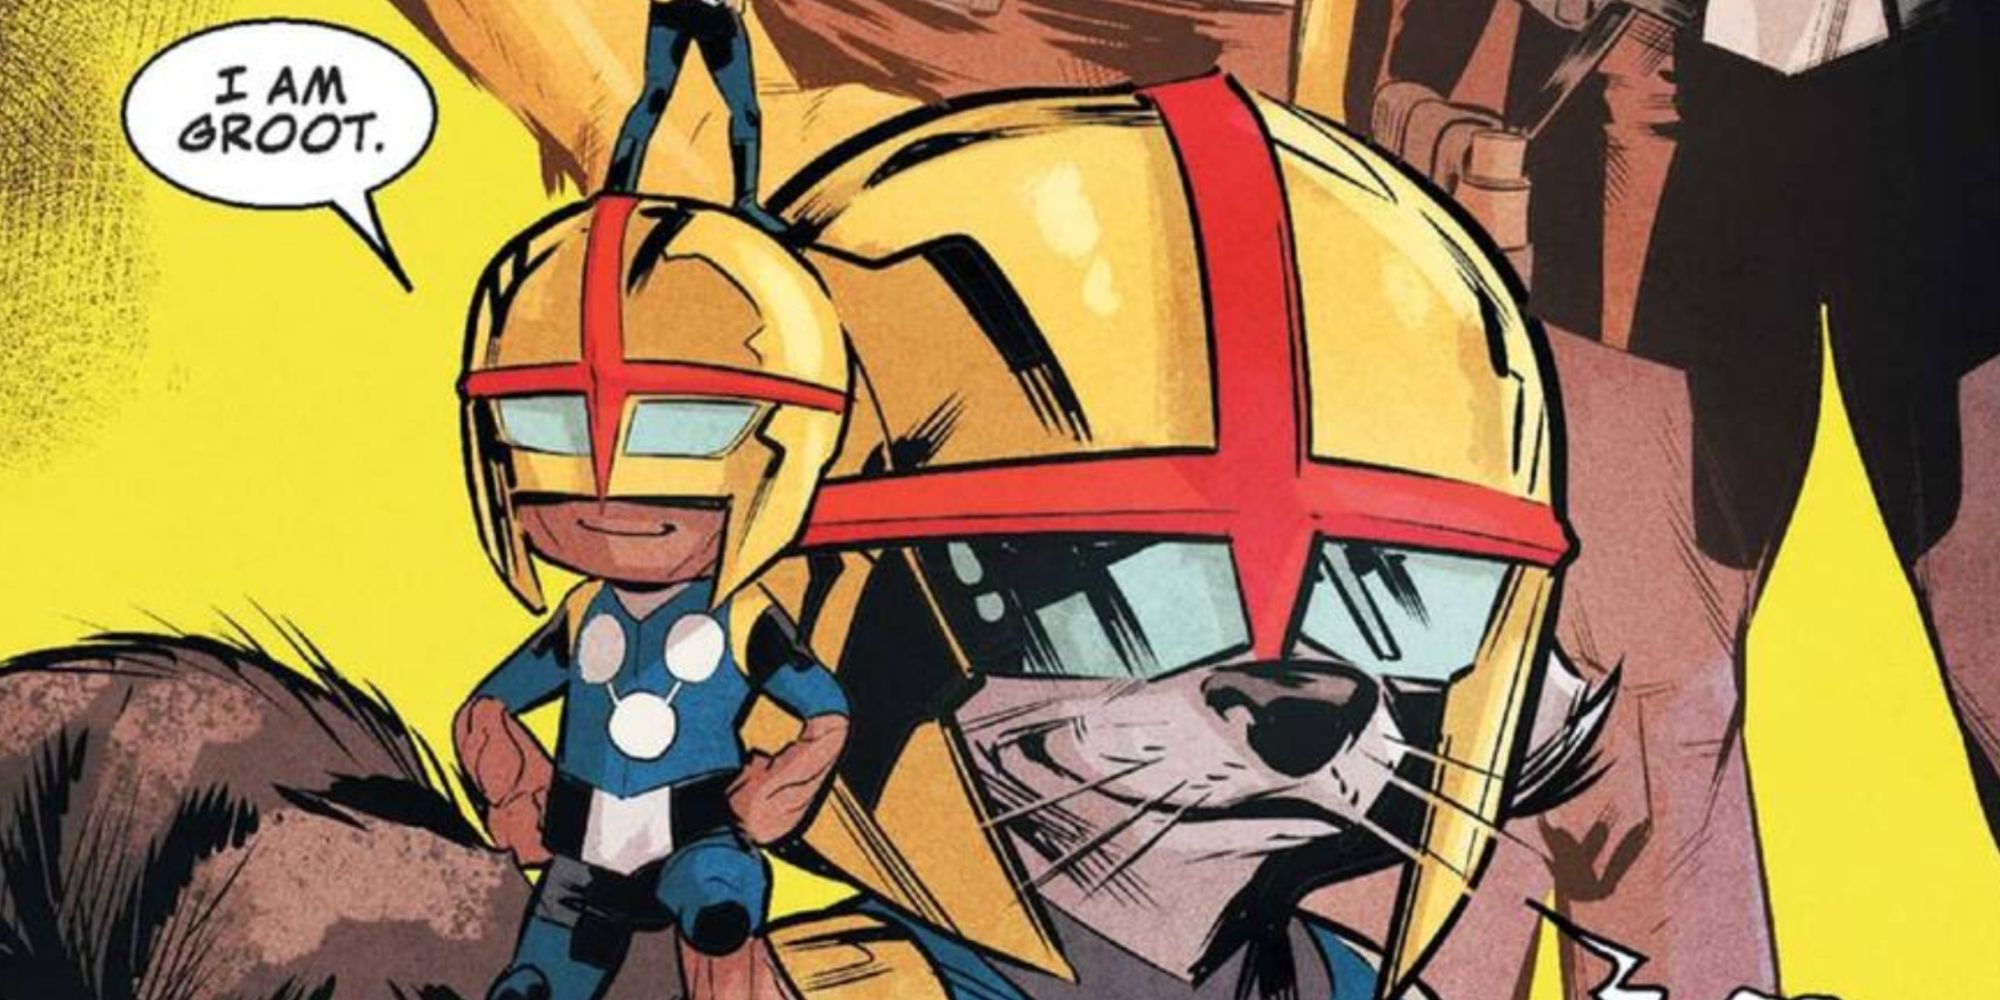 Groot and Rocket Raccoon join the Nova Corps in Marvel Comics.